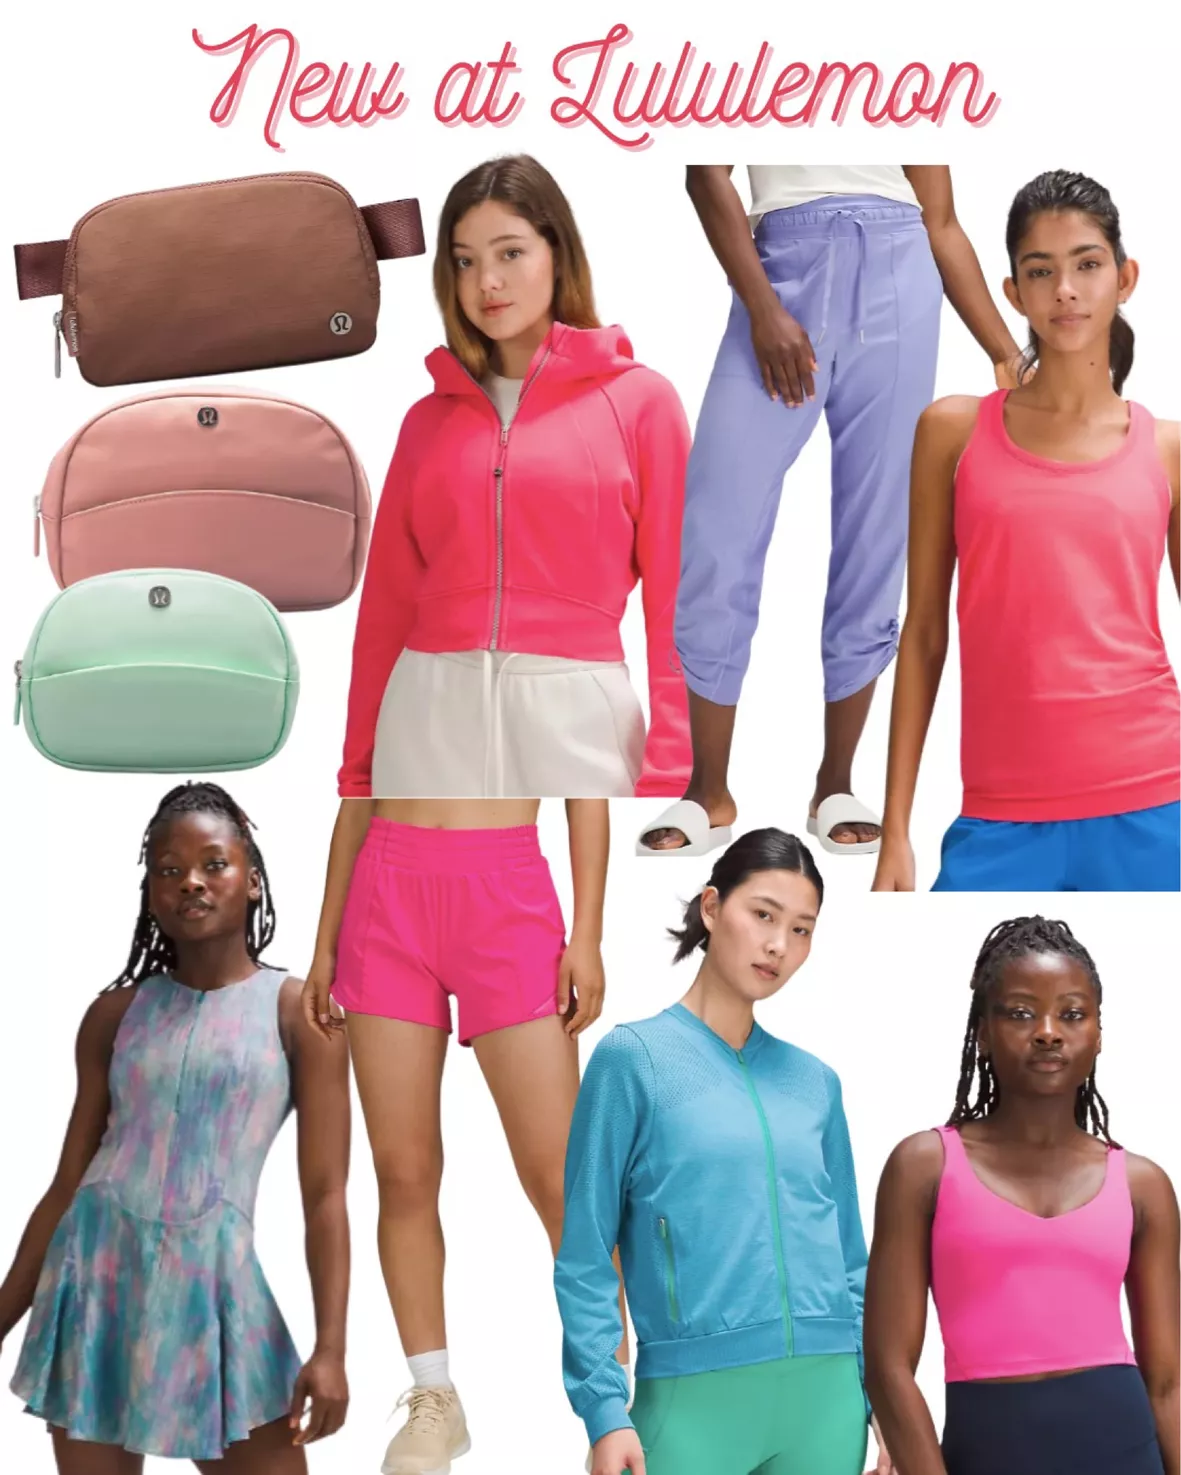 lululemon align shorts sonic pink 6”, Women's Fashion, Activewear